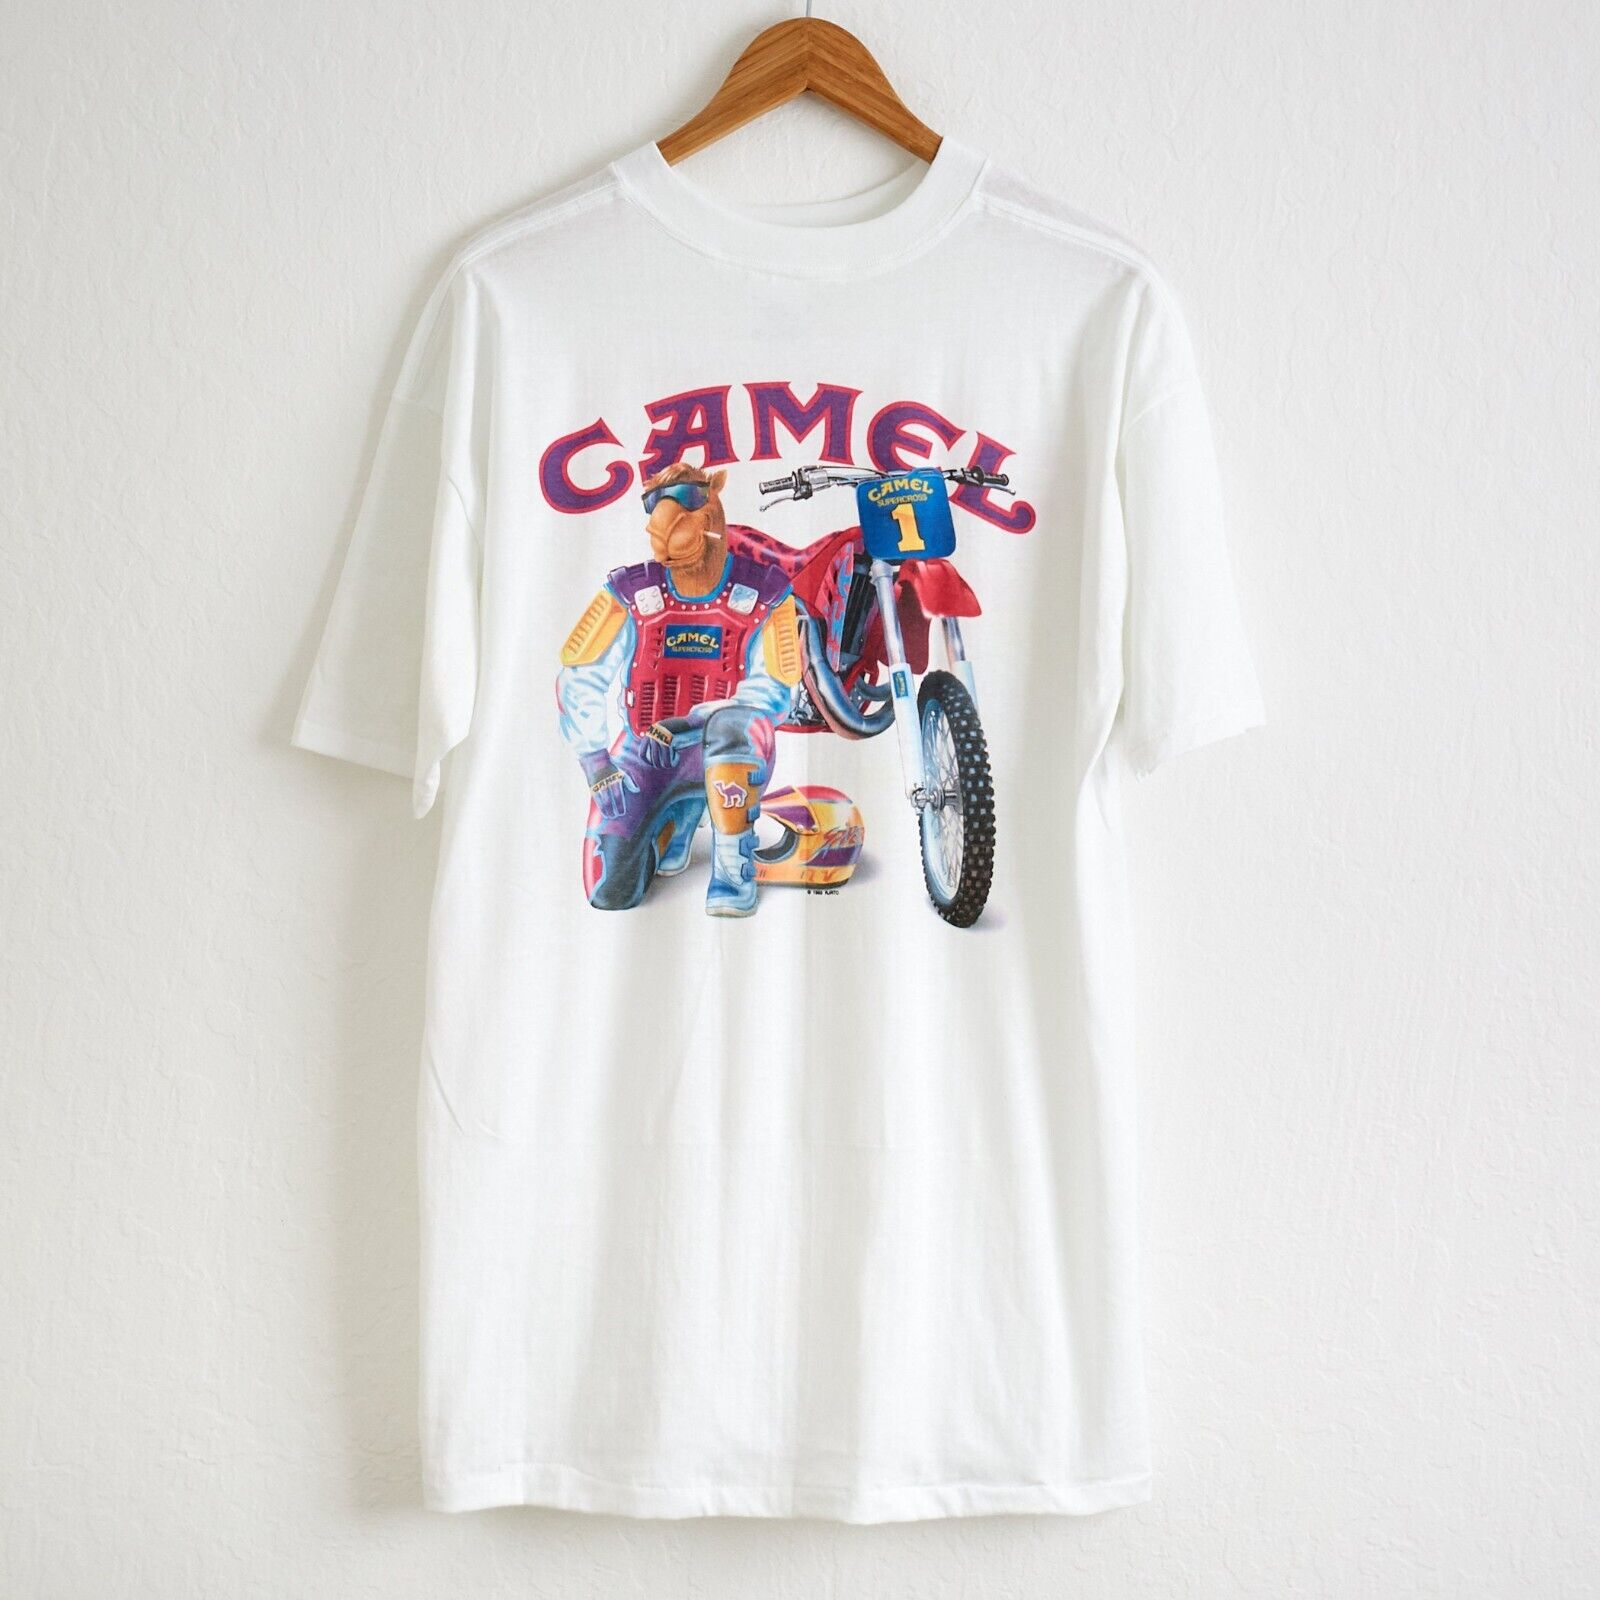 Vintage 1993 Camel Super cross Short Sleeve Cotton T-Shirt All Size S-5XL TU3806